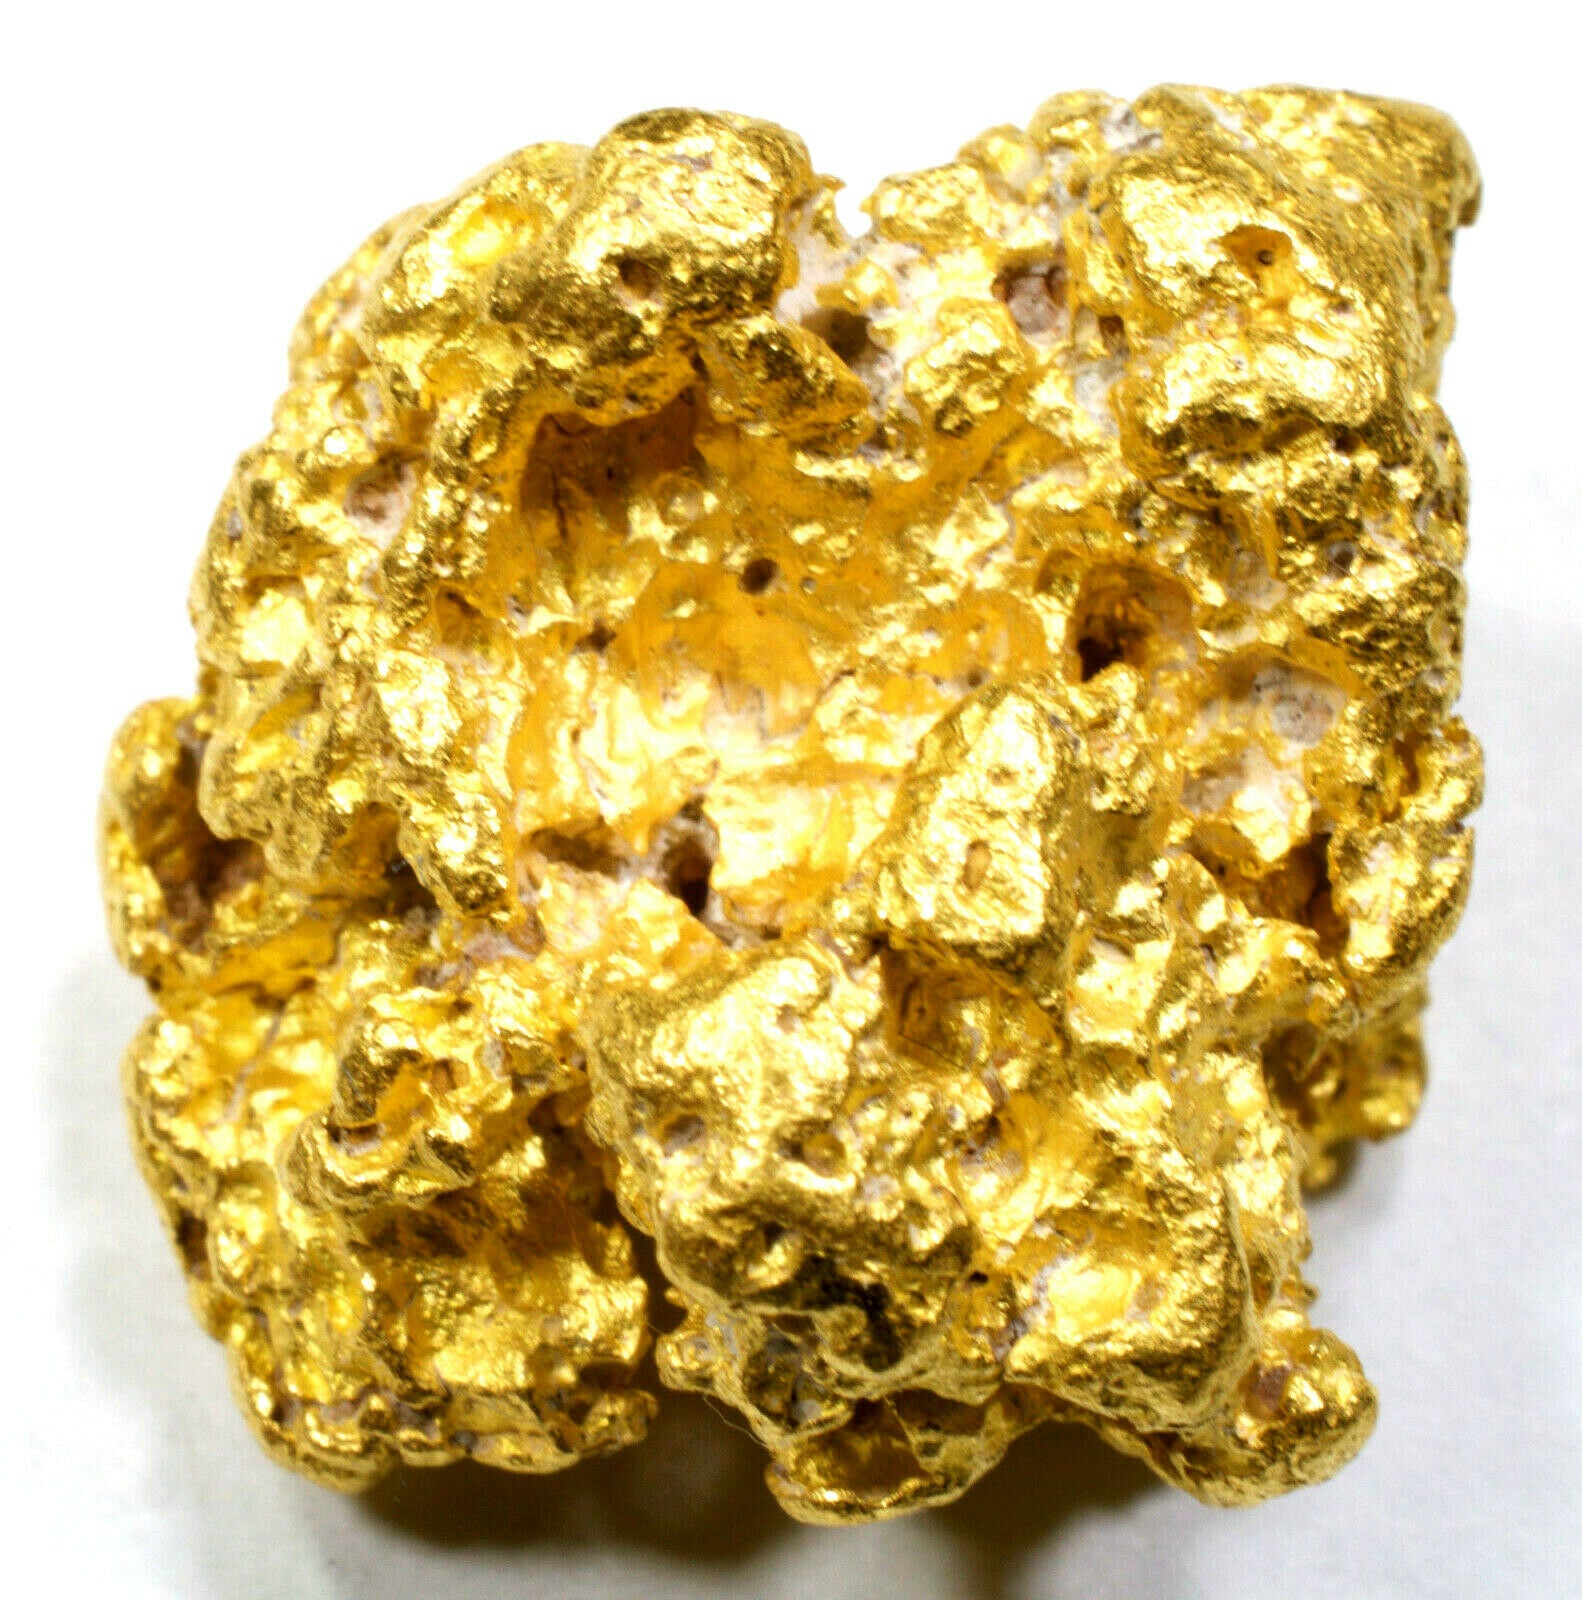 14.187 GRAMS AUSTRALIAN NATURAL PURE GOLD NUGGET GENUINE 94-98% PURE (#AU800) A GRADE - Liquidbullion